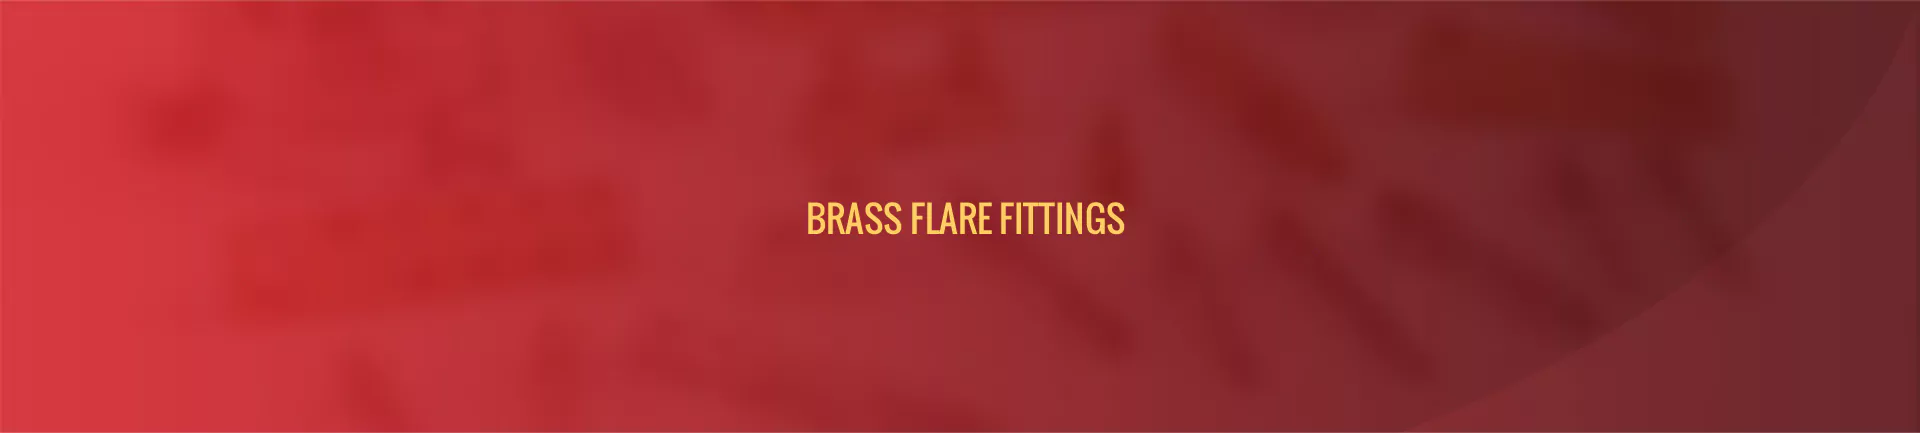 brass-flare-fittings-banner